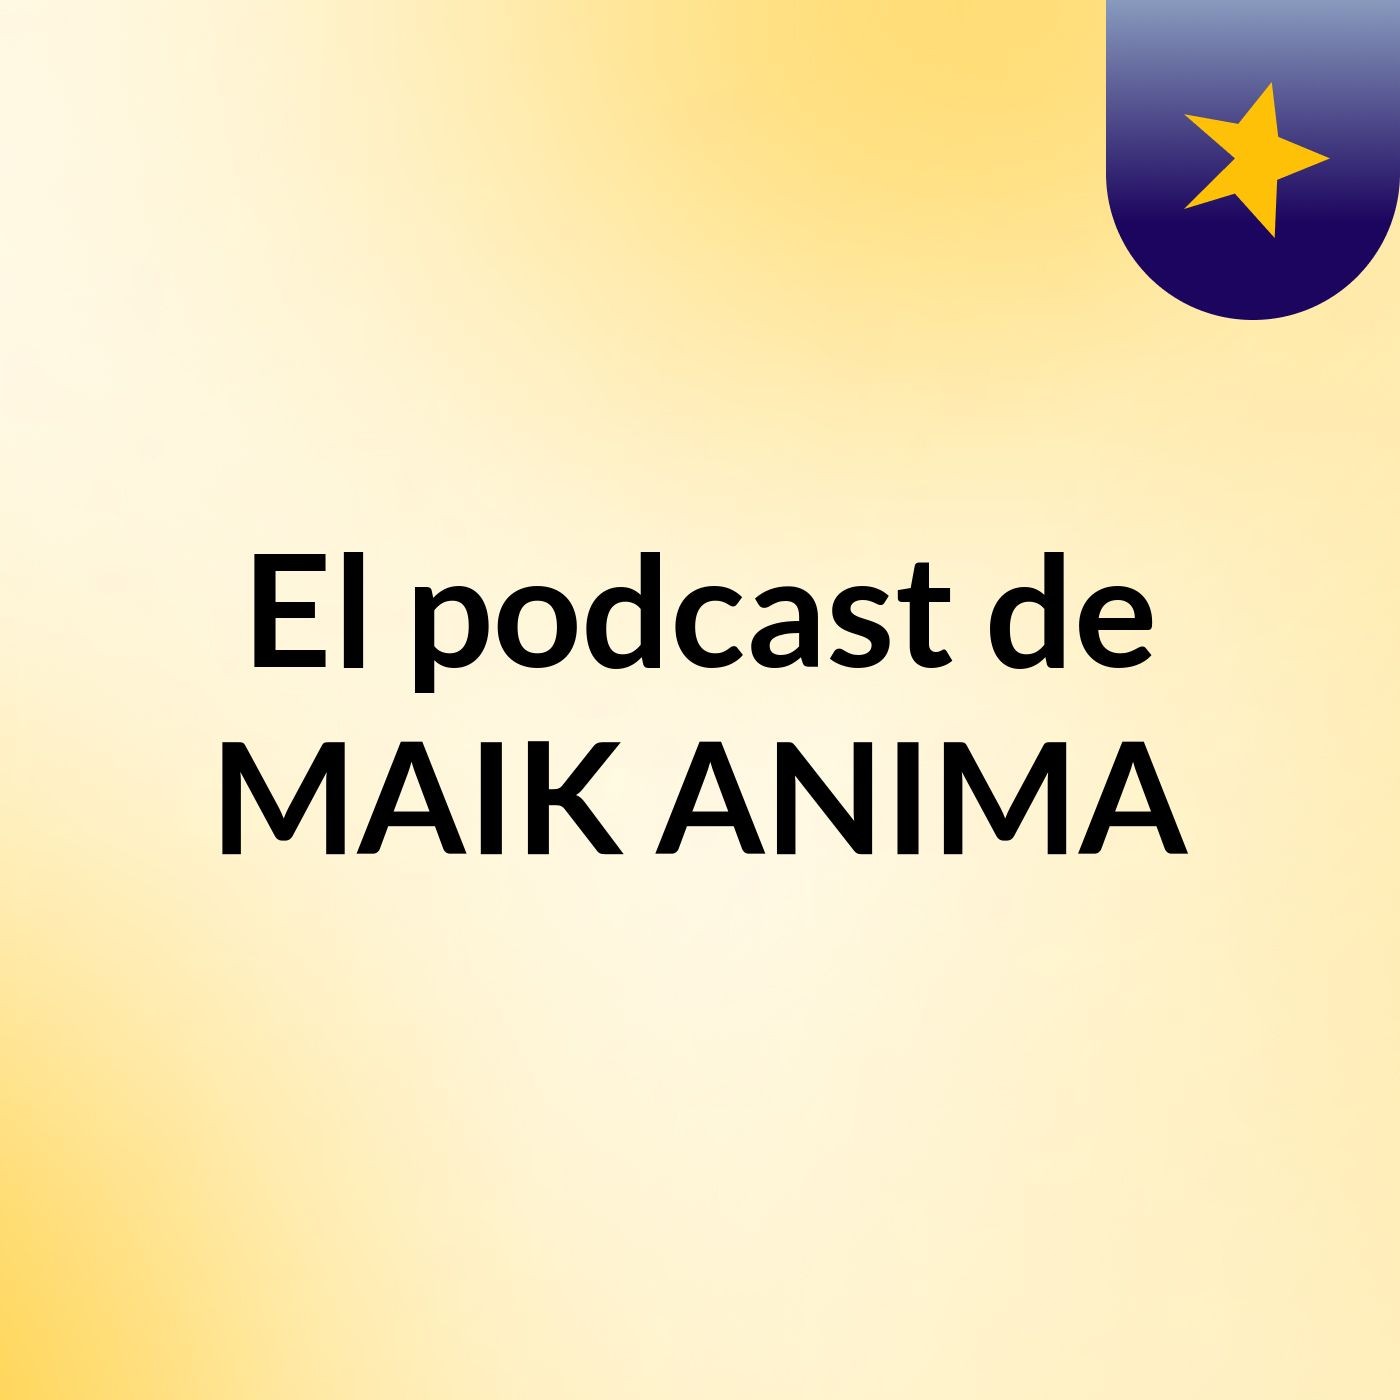 El podcast de MAIK ANIMA